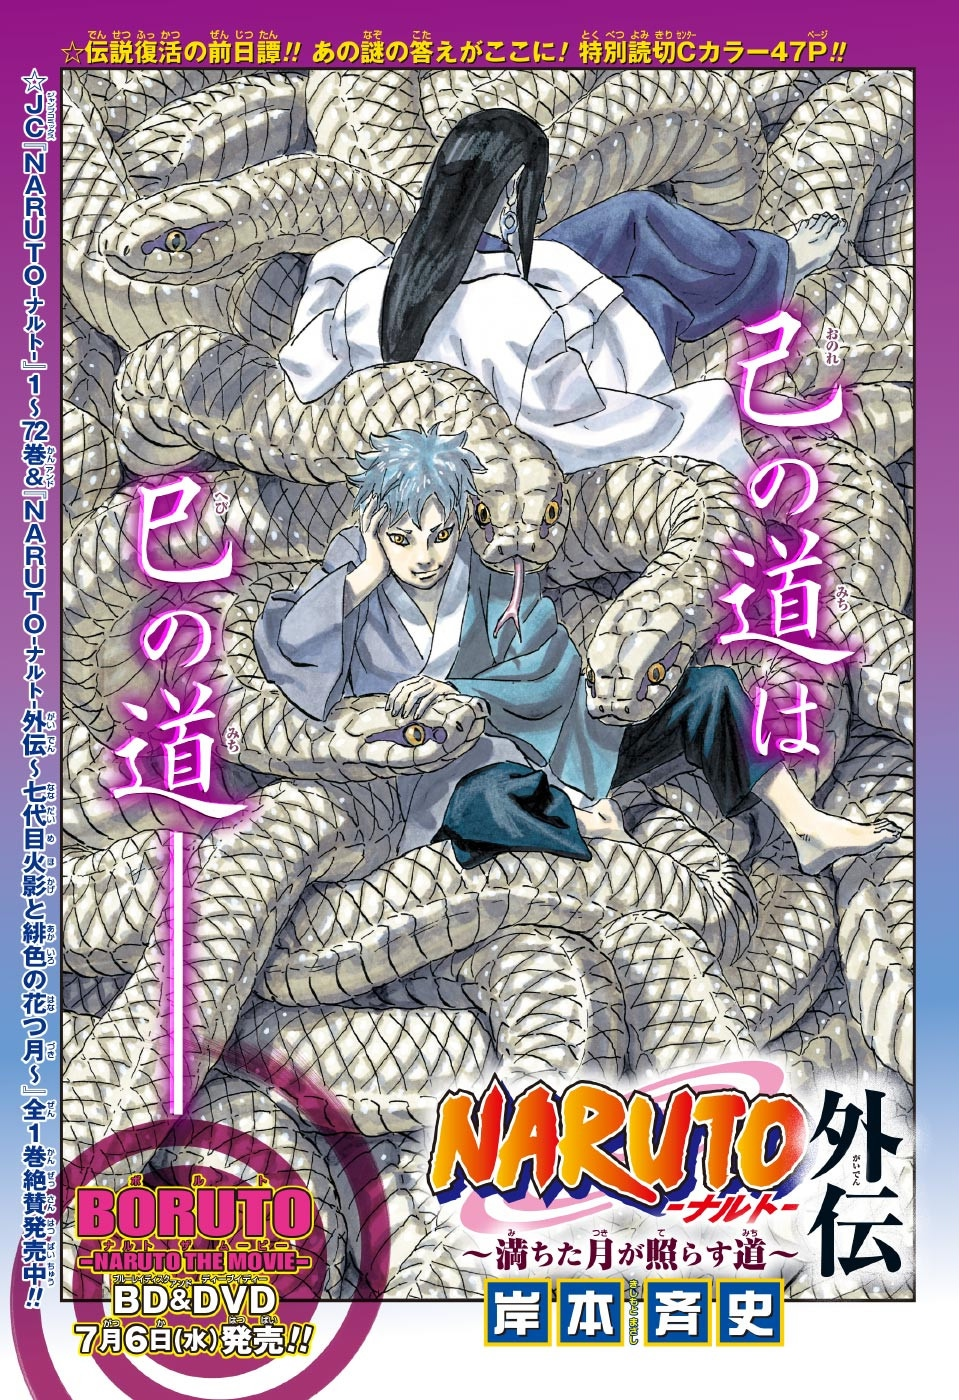 Boruto Explorer - Naruto Gaiden: O caminho iluminado pela